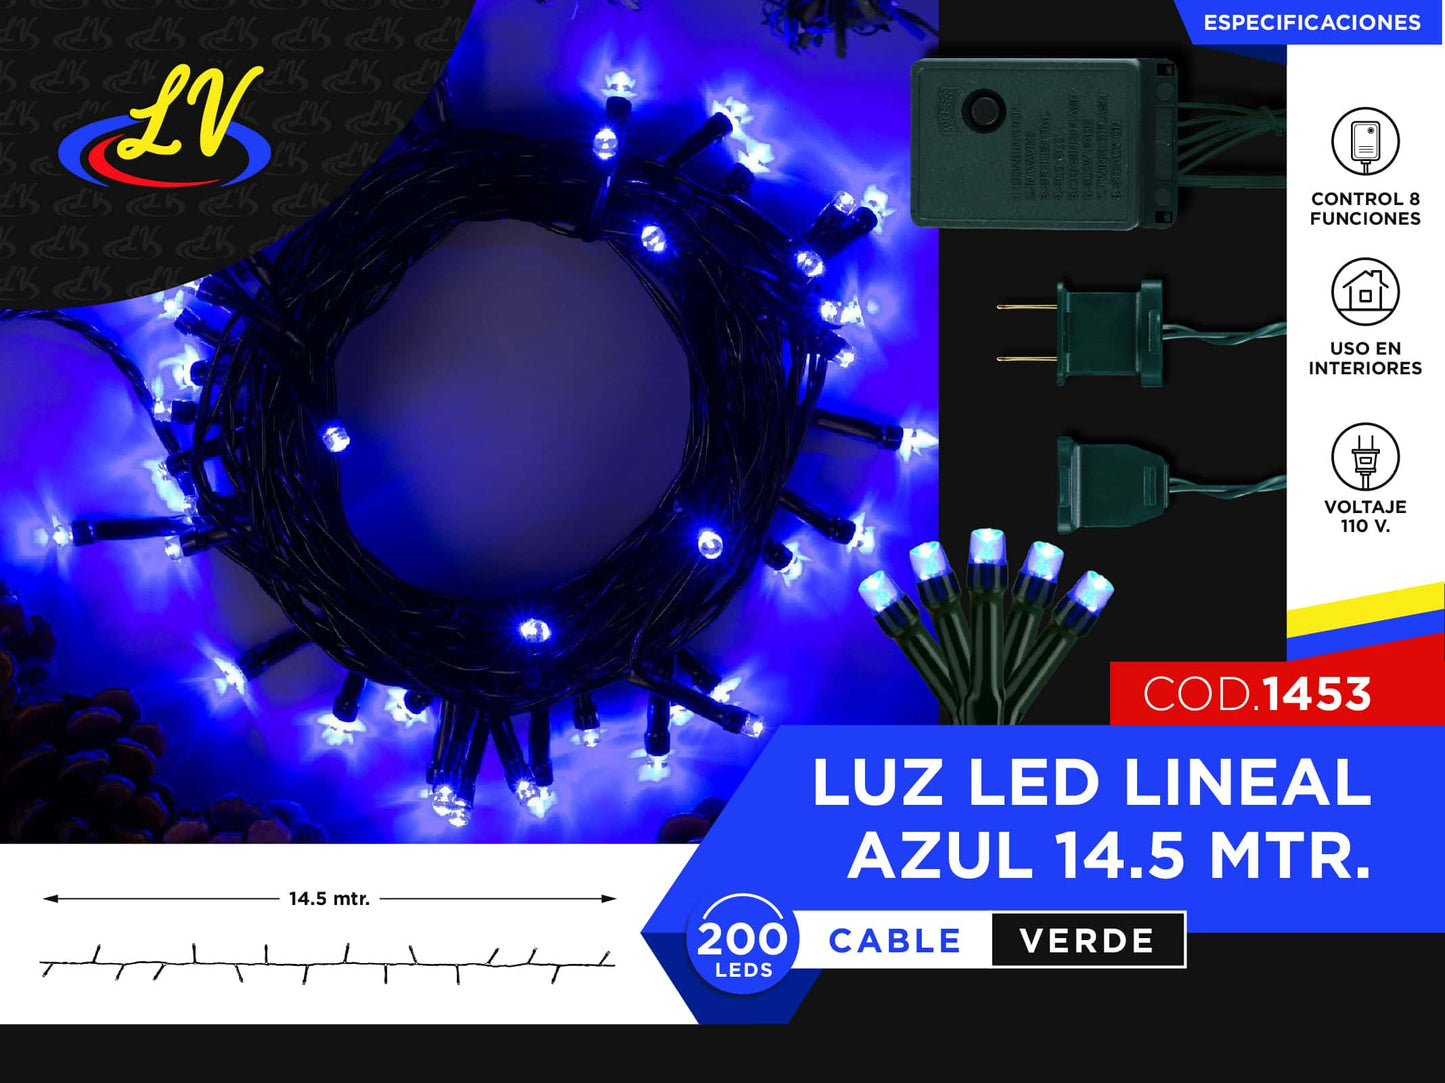 LINEAL – AZUL – 14.5 MTS